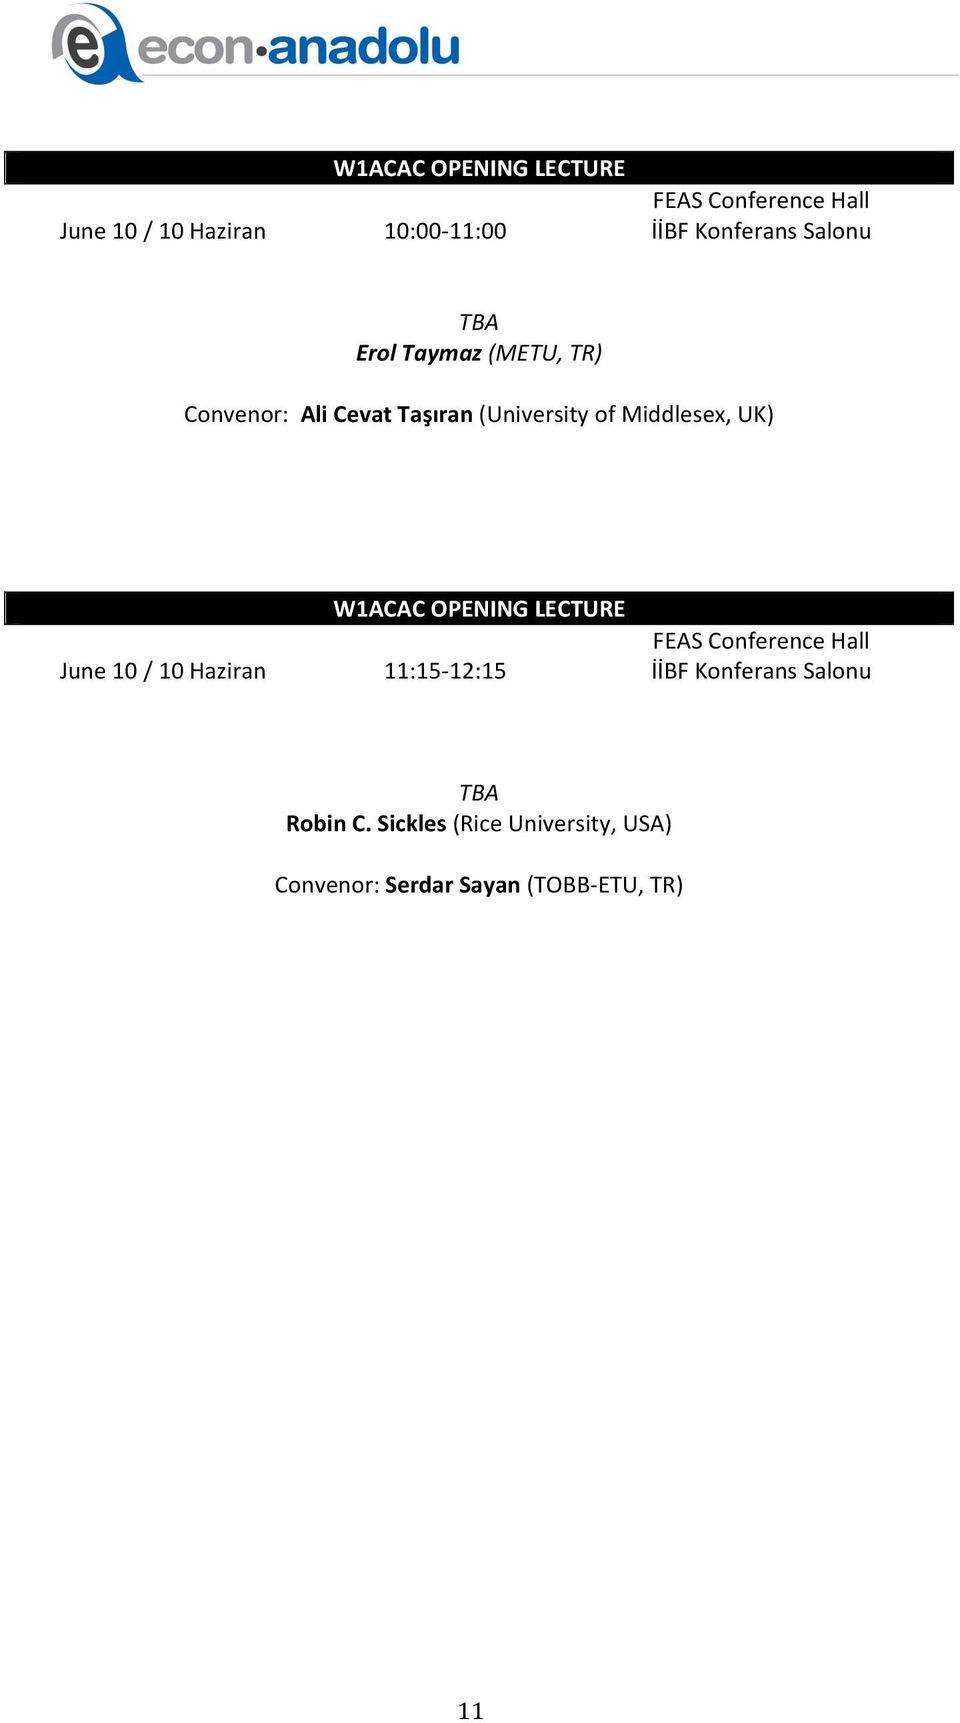 June 10 / 10 Haziran W1ACAC OPENING LECTURE 11:15-12:15 FEAS Conference Hall İİBF Konferans